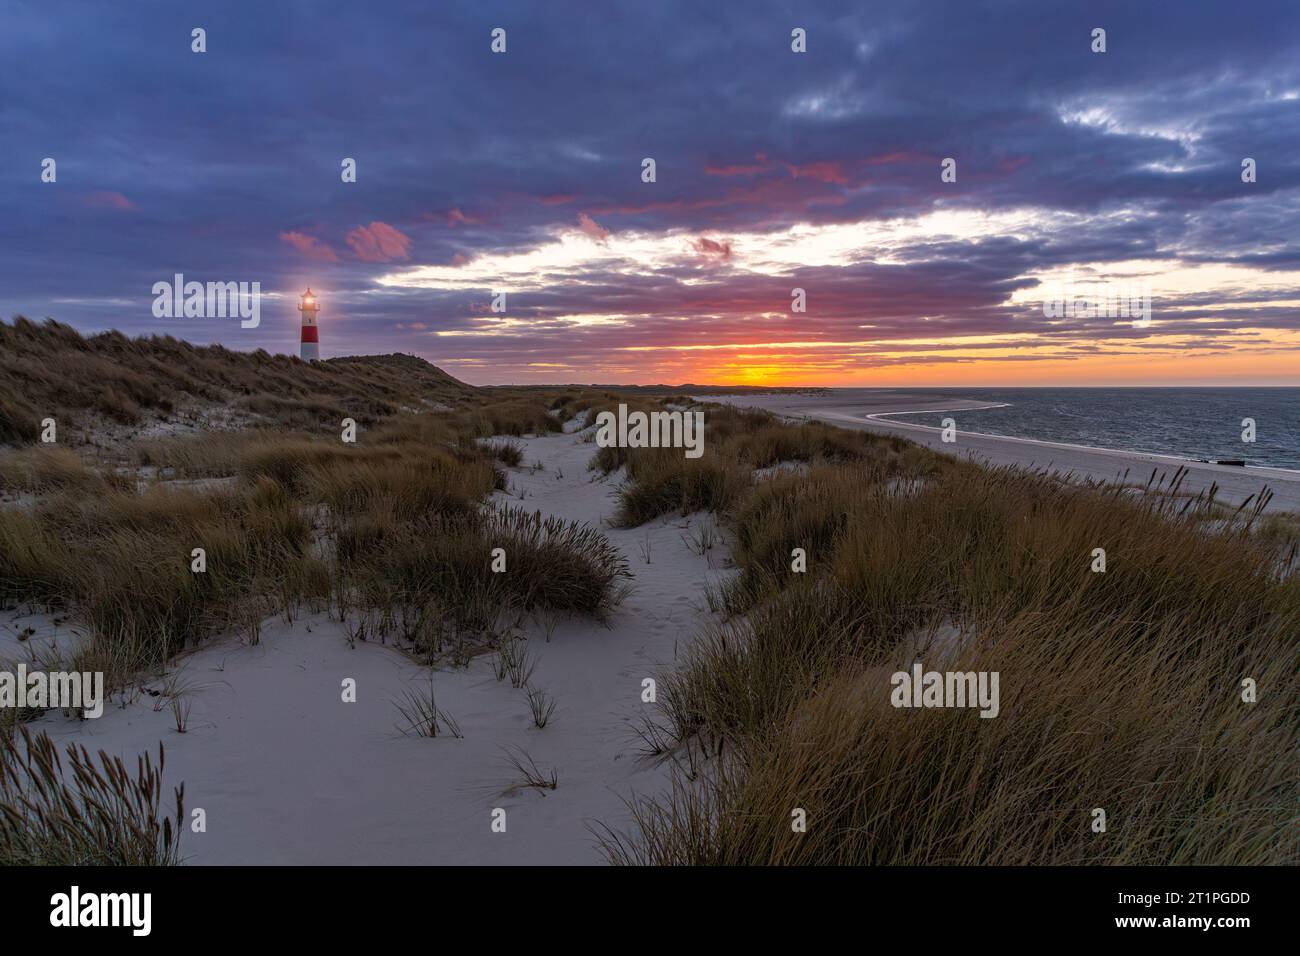 Ellenbogen Beach on the Island Sylt at Sunset Stock Photo